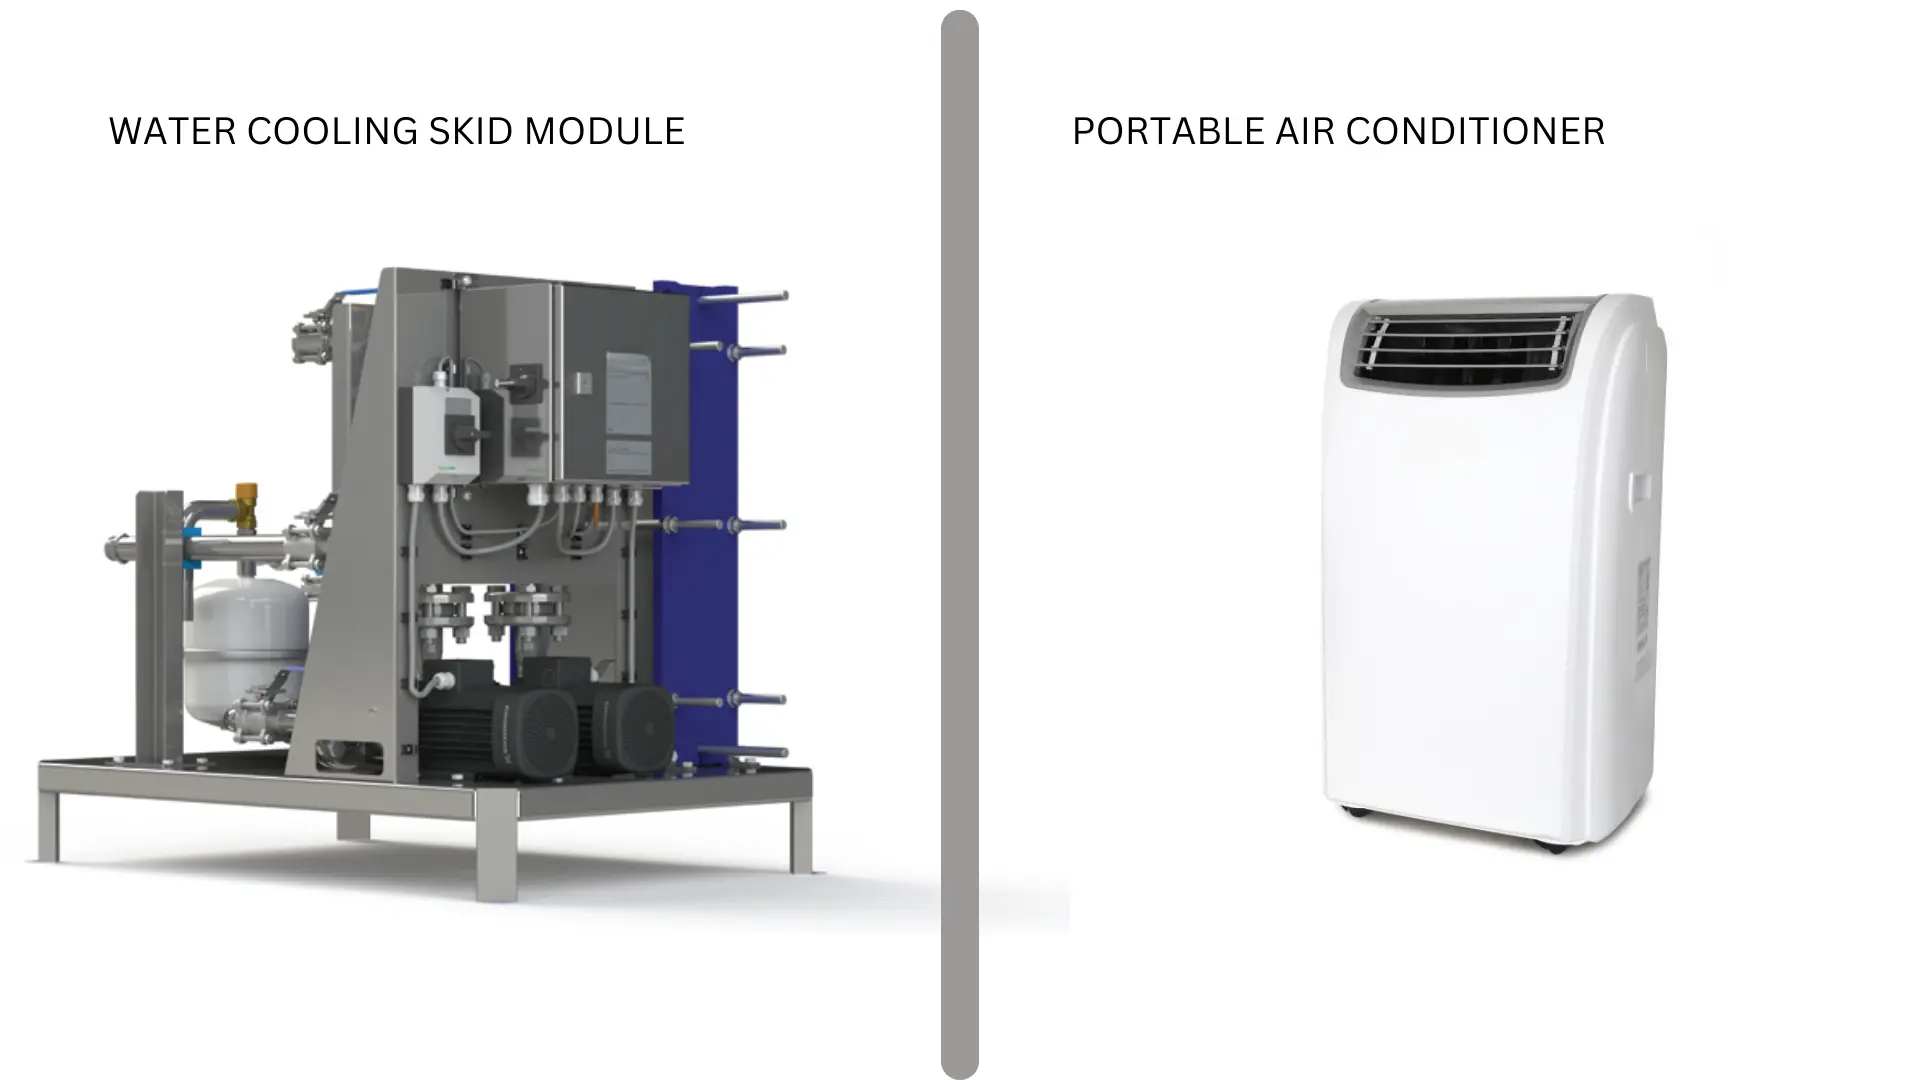 Cooling system comparison